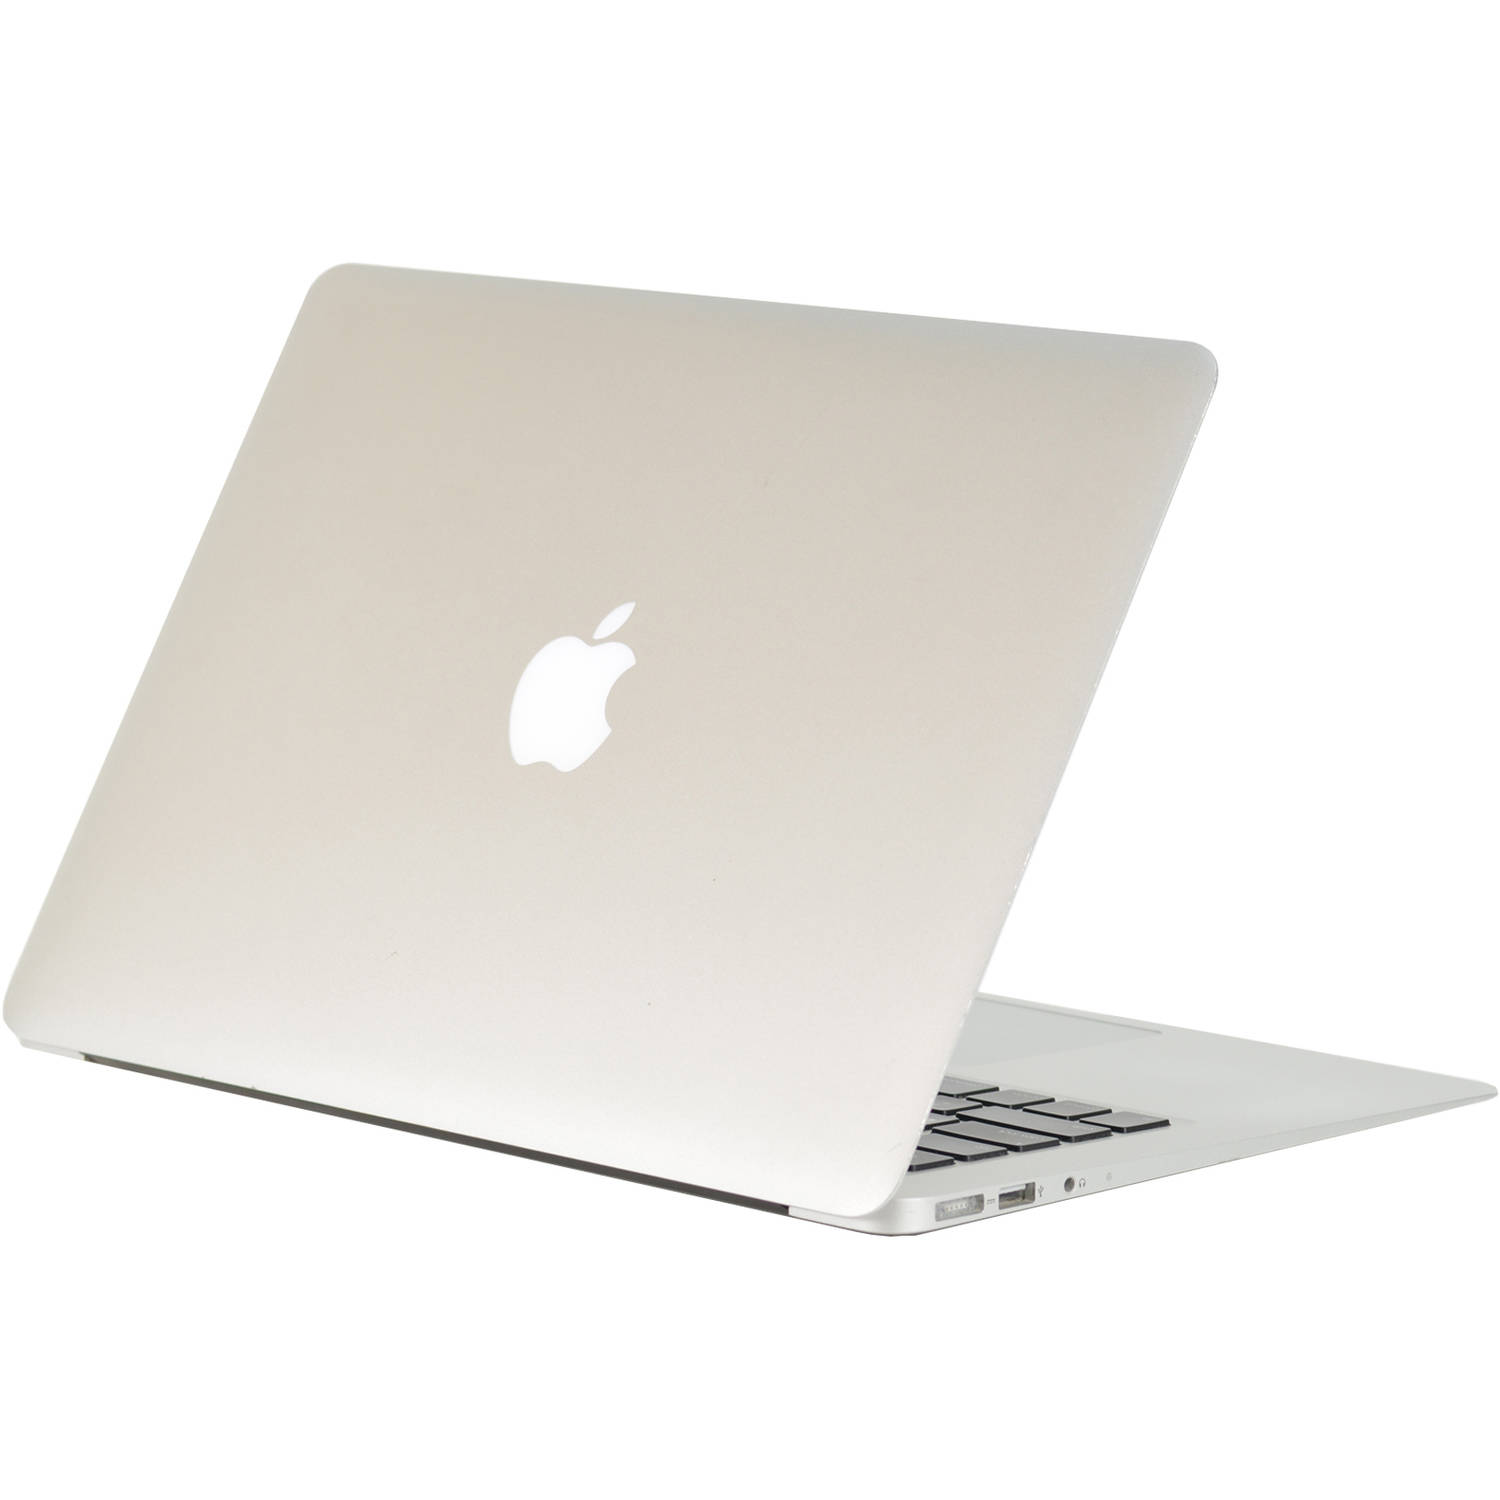 Restored Apple MacBook Air Core i5-4250U Dual-Core 1.3GHz 4GB Ram, 128GB SSD 13.3" LED Notebook MD760LL/A (Refurbished) - image 4 of 4